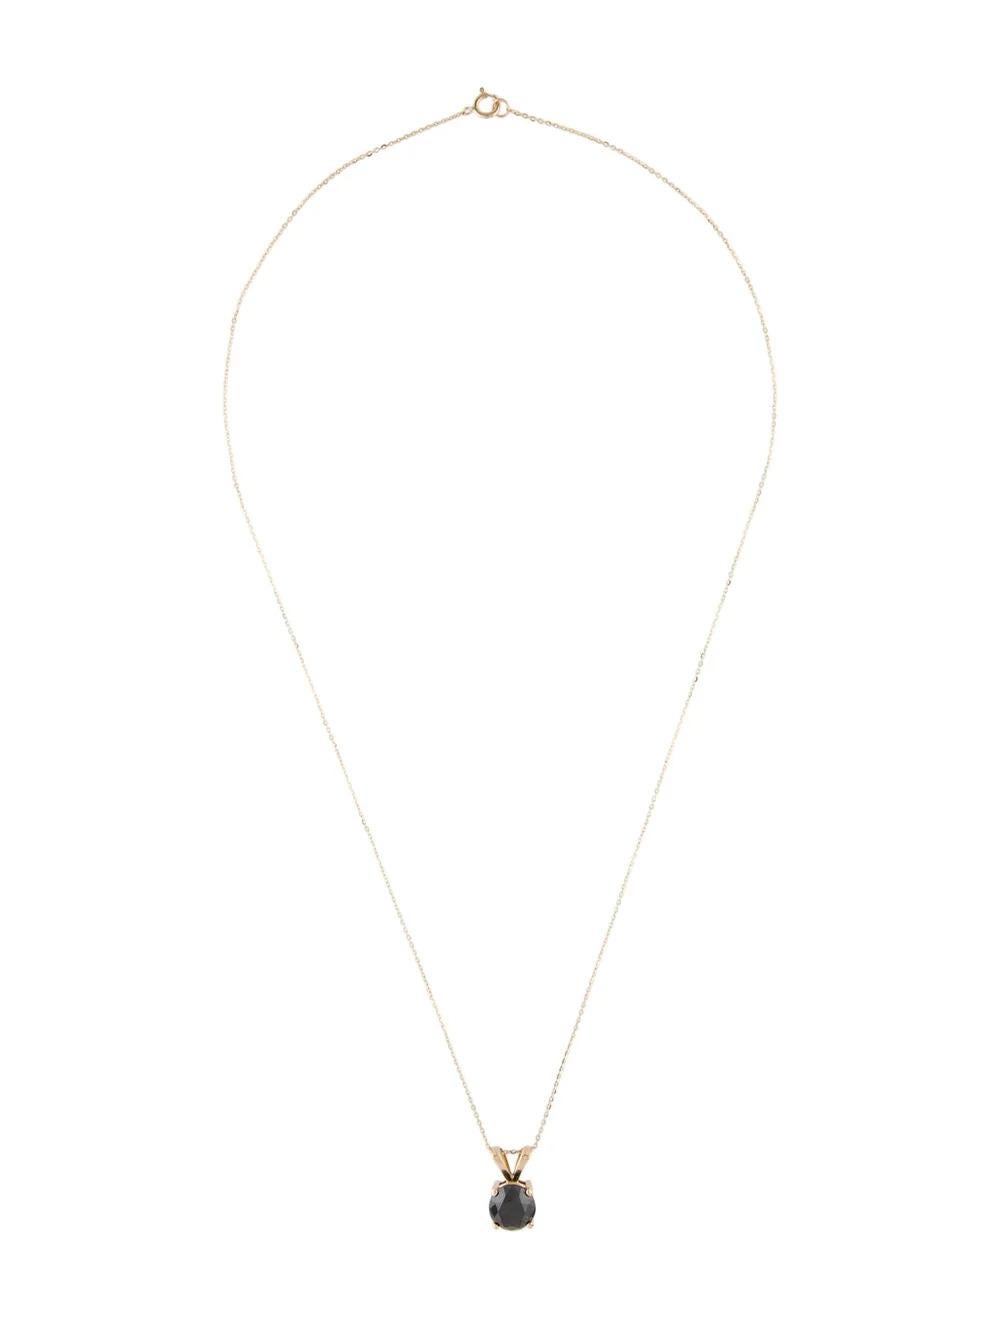 Round Cut 14K Diamond Pendant Necklace, 3.77ctw - Stunning Statement Jewelry, Luxury Piece For Sale